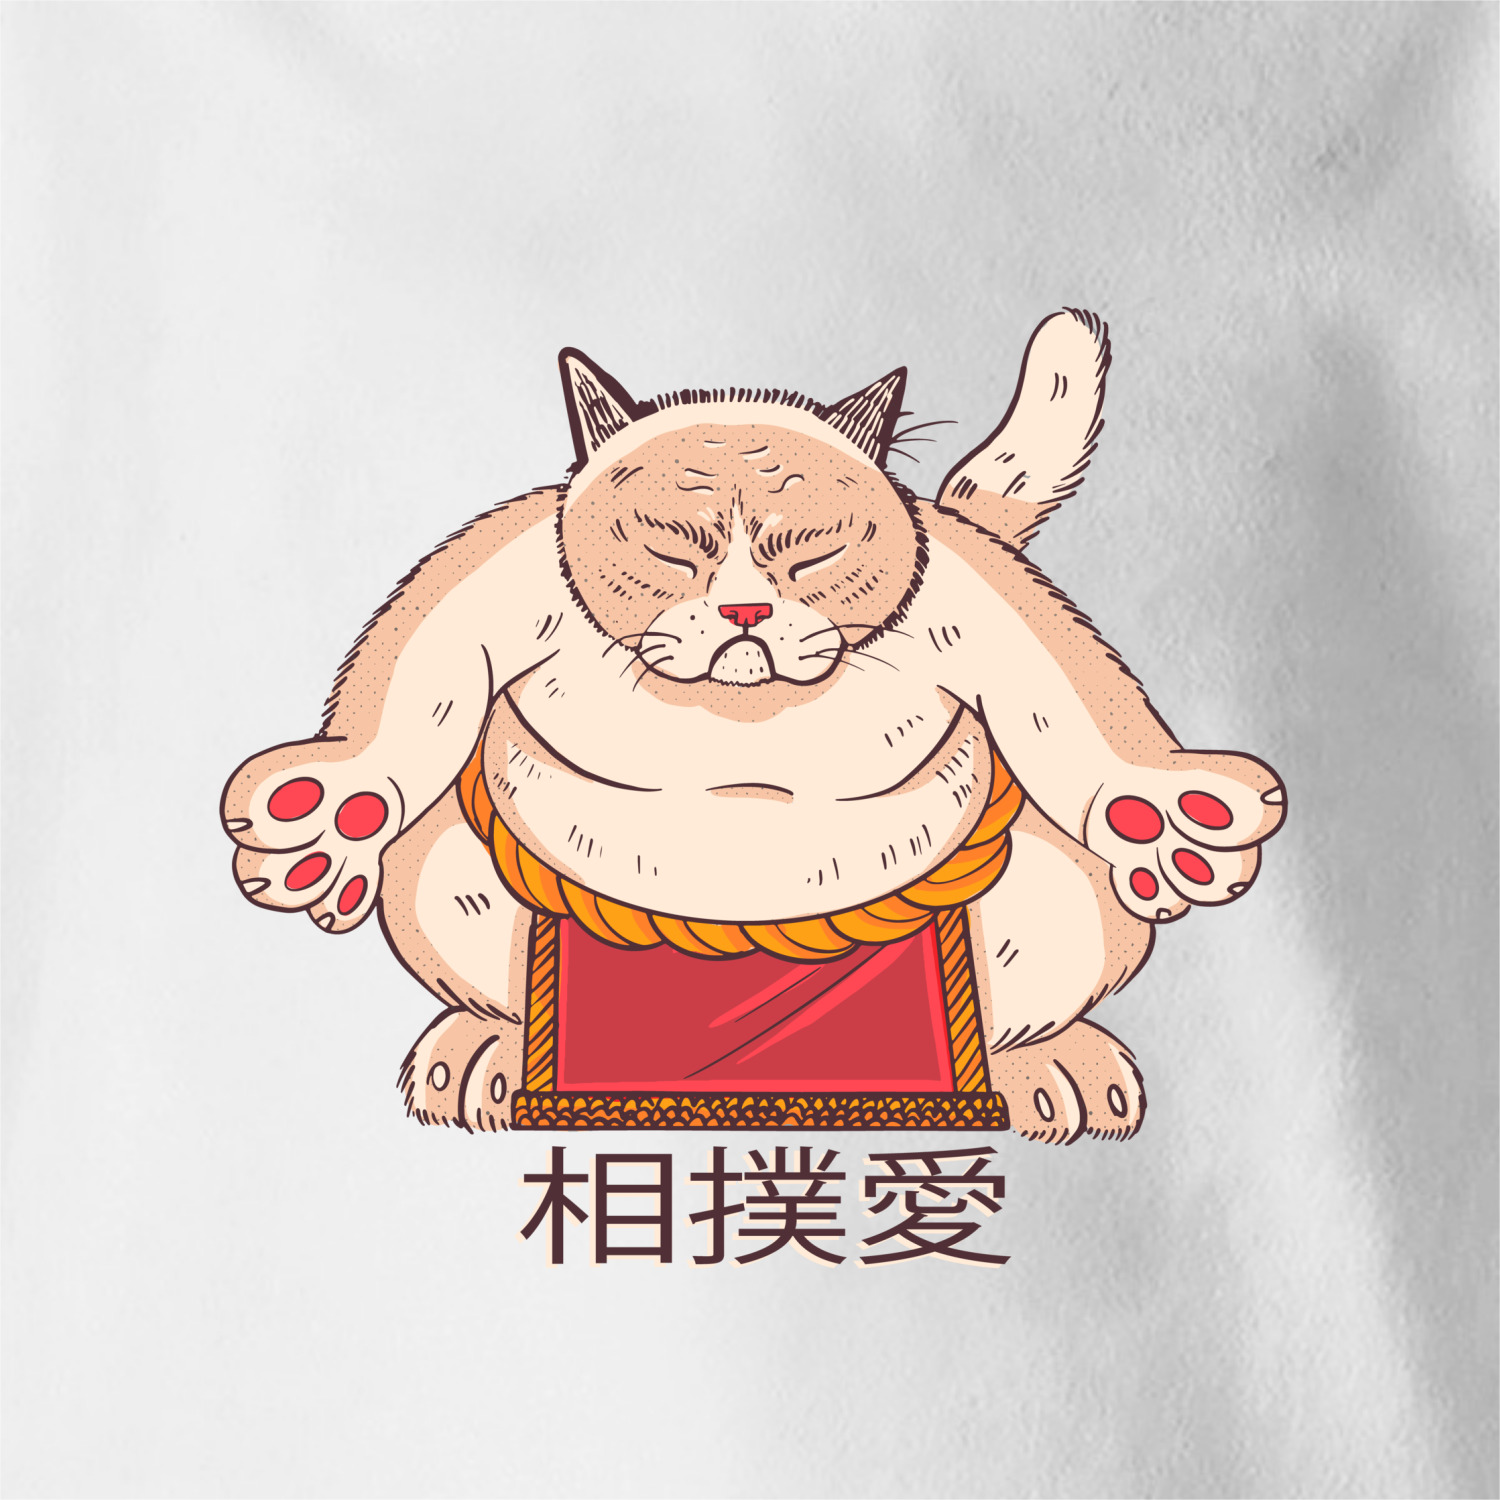 Песня суши манго сумо татами. Кот борец. Кот дзюдоист. Кот борец Мем. Sumo Tatami игра.